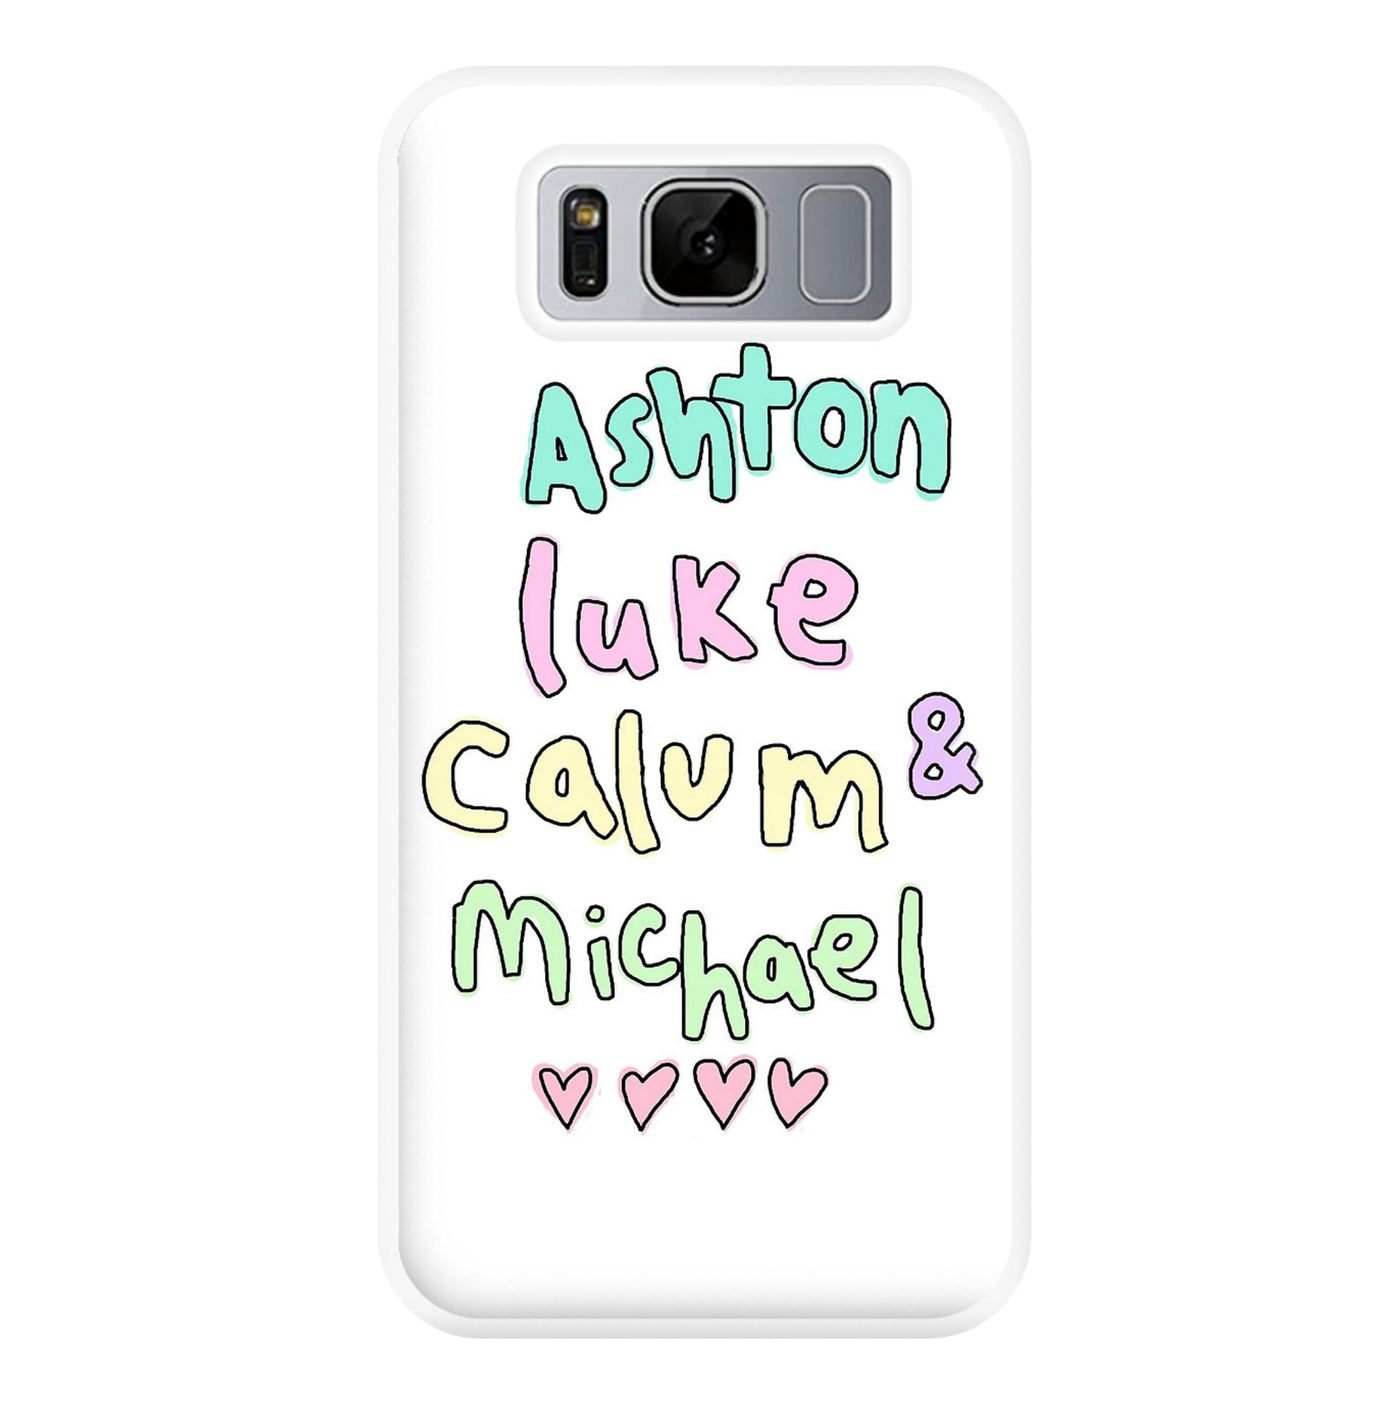 5 Seconds of Summer - Ashton, Luke, Calum & Michael Phone Case